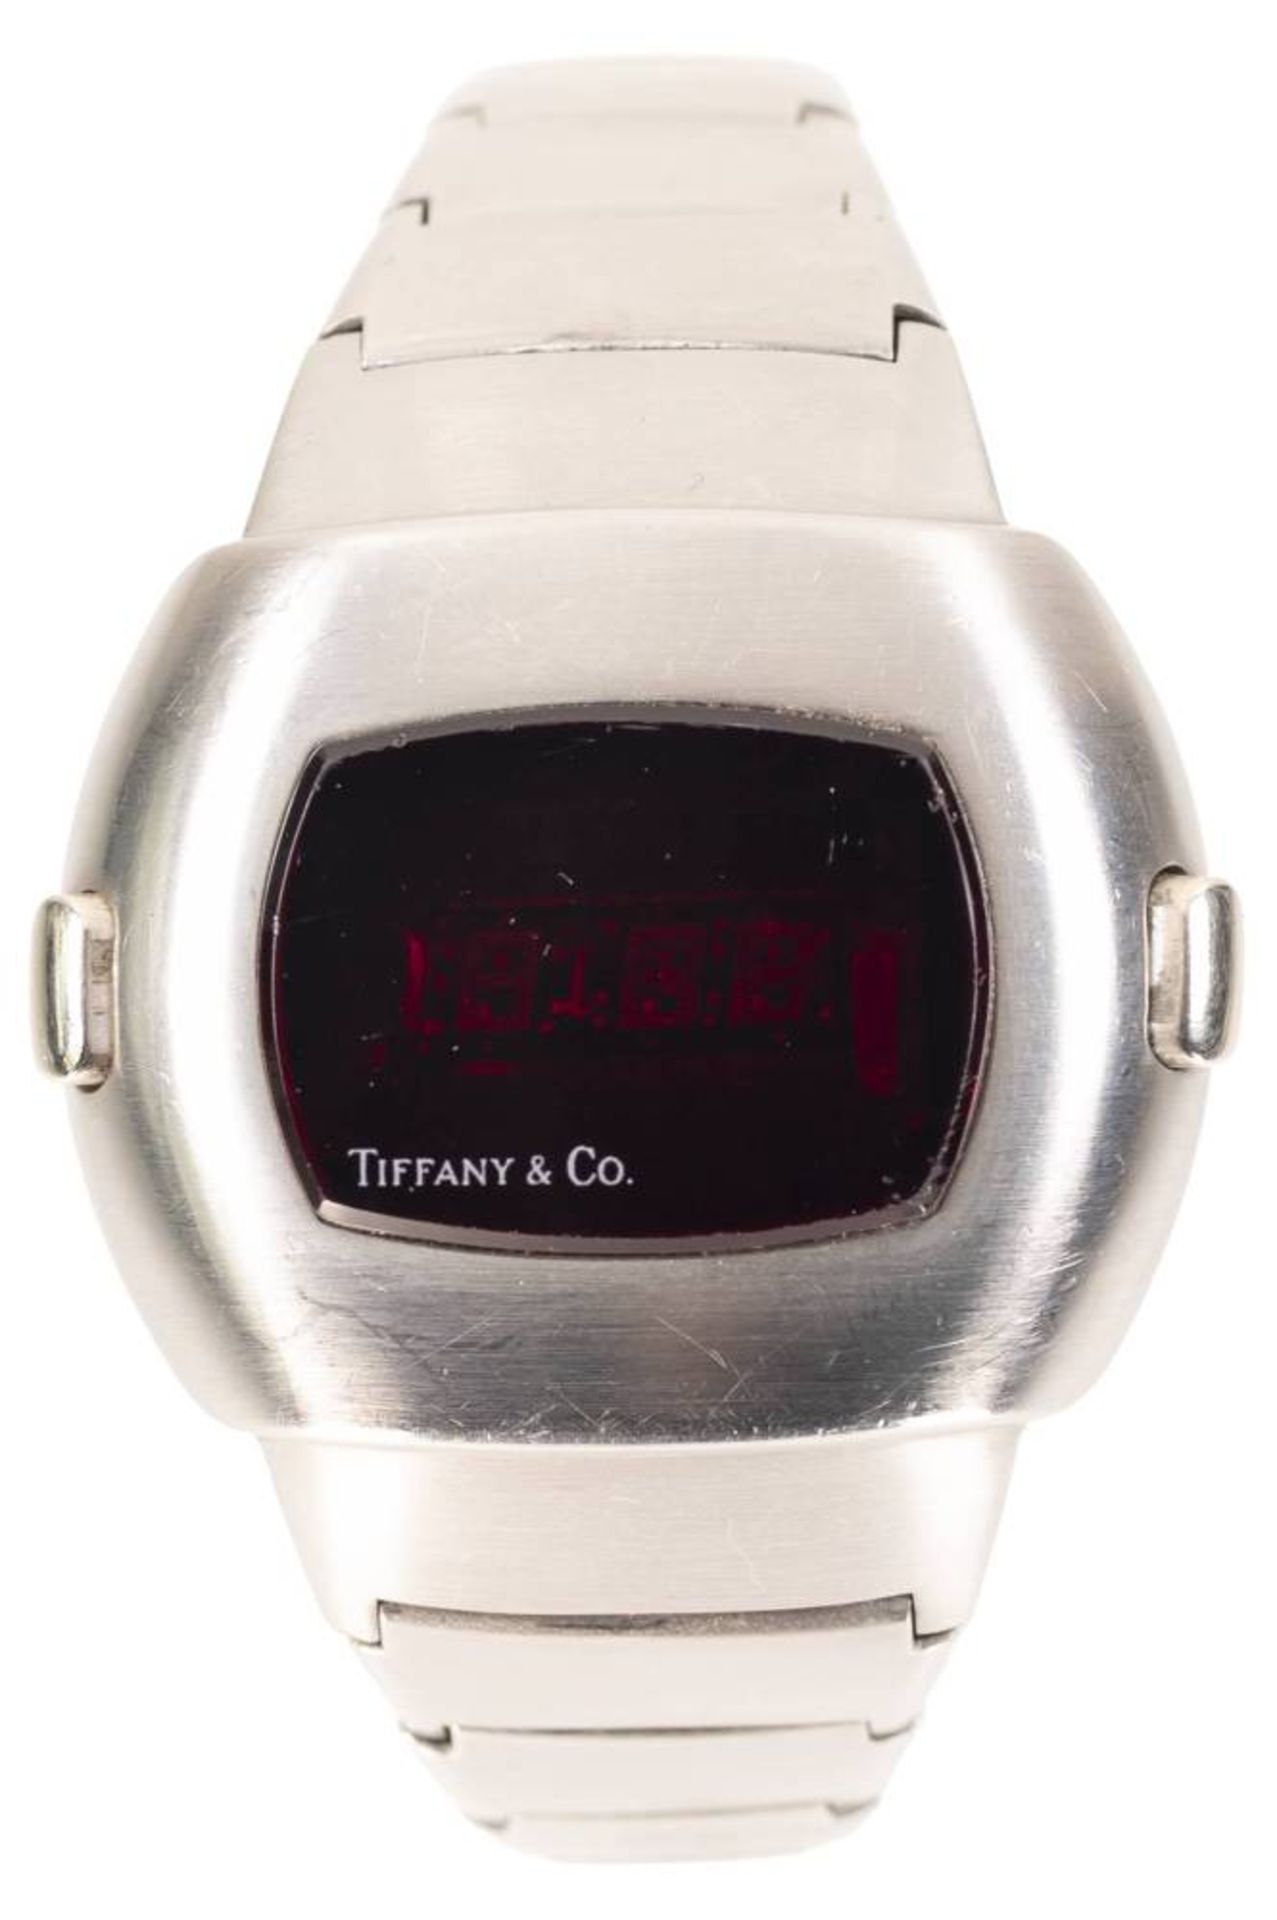 Konvolut mit 5 Armbanduhren, darunter TIFFANY & CO Pulsar LED-Uhr Time Computer 1973, Funktion nicht